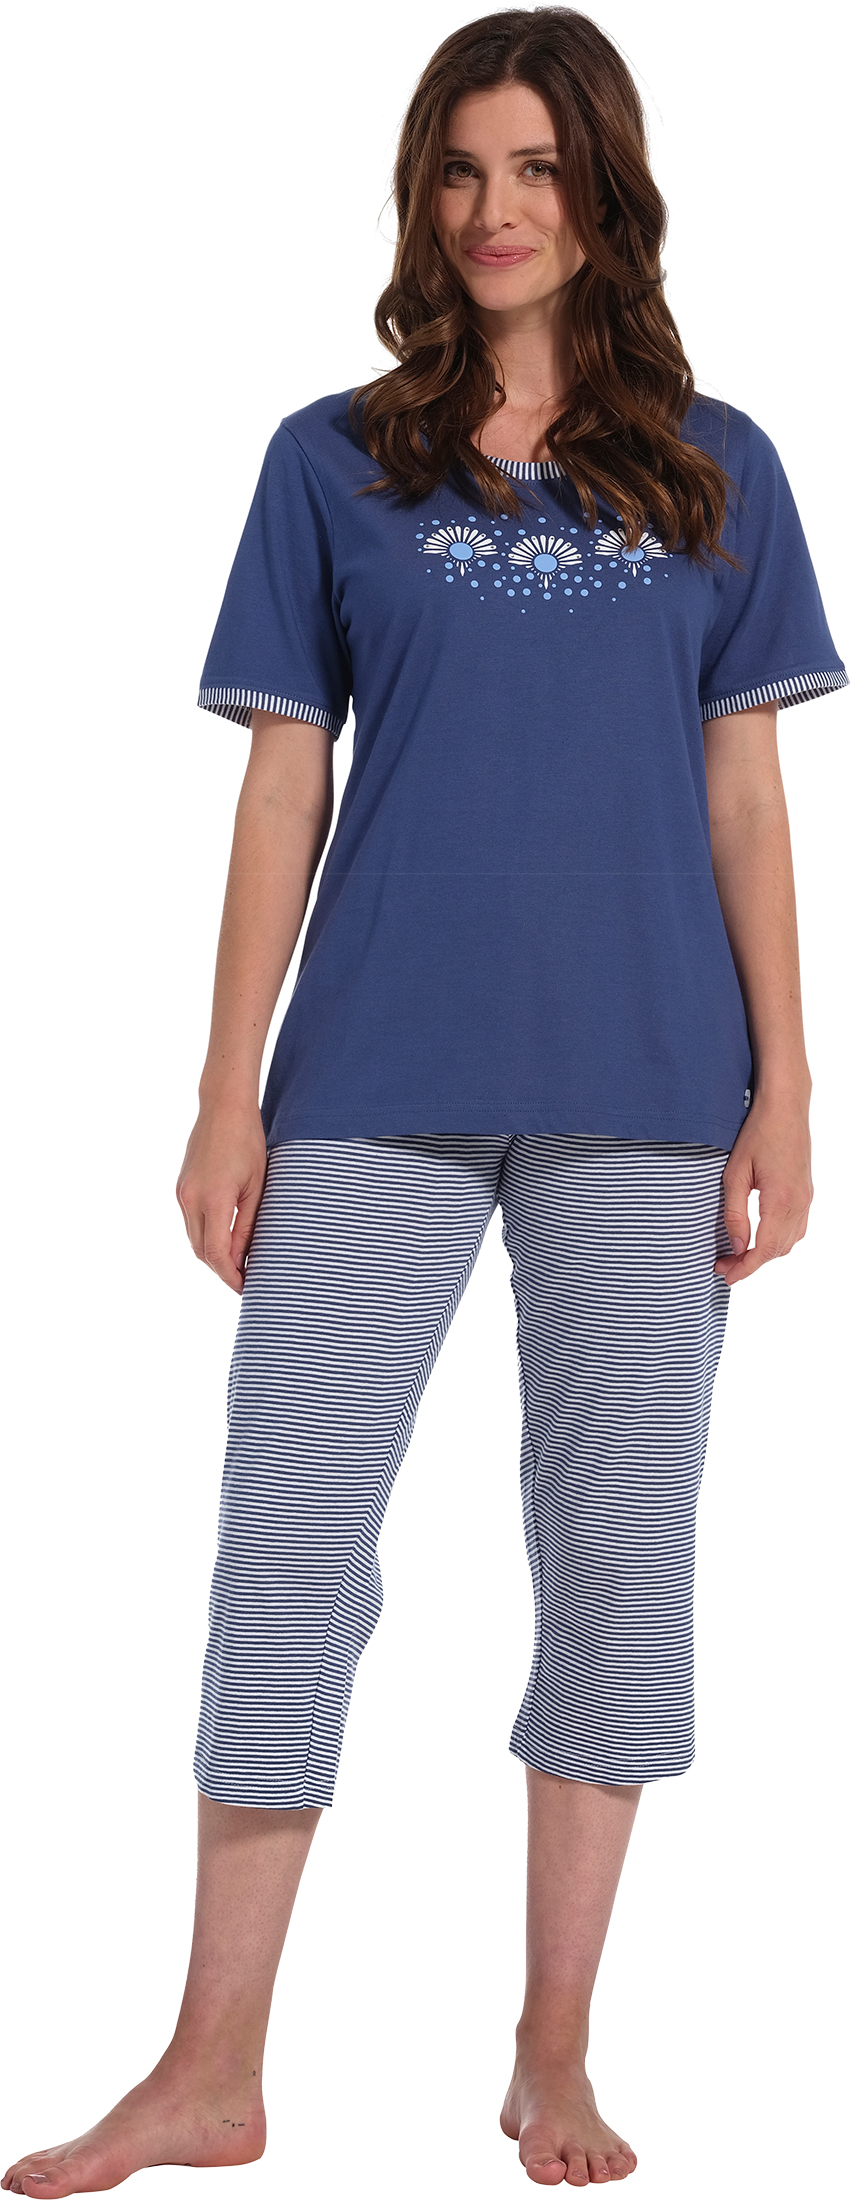 Pastunette dames pyjama capri 20231-138-2 - Blauw - 52